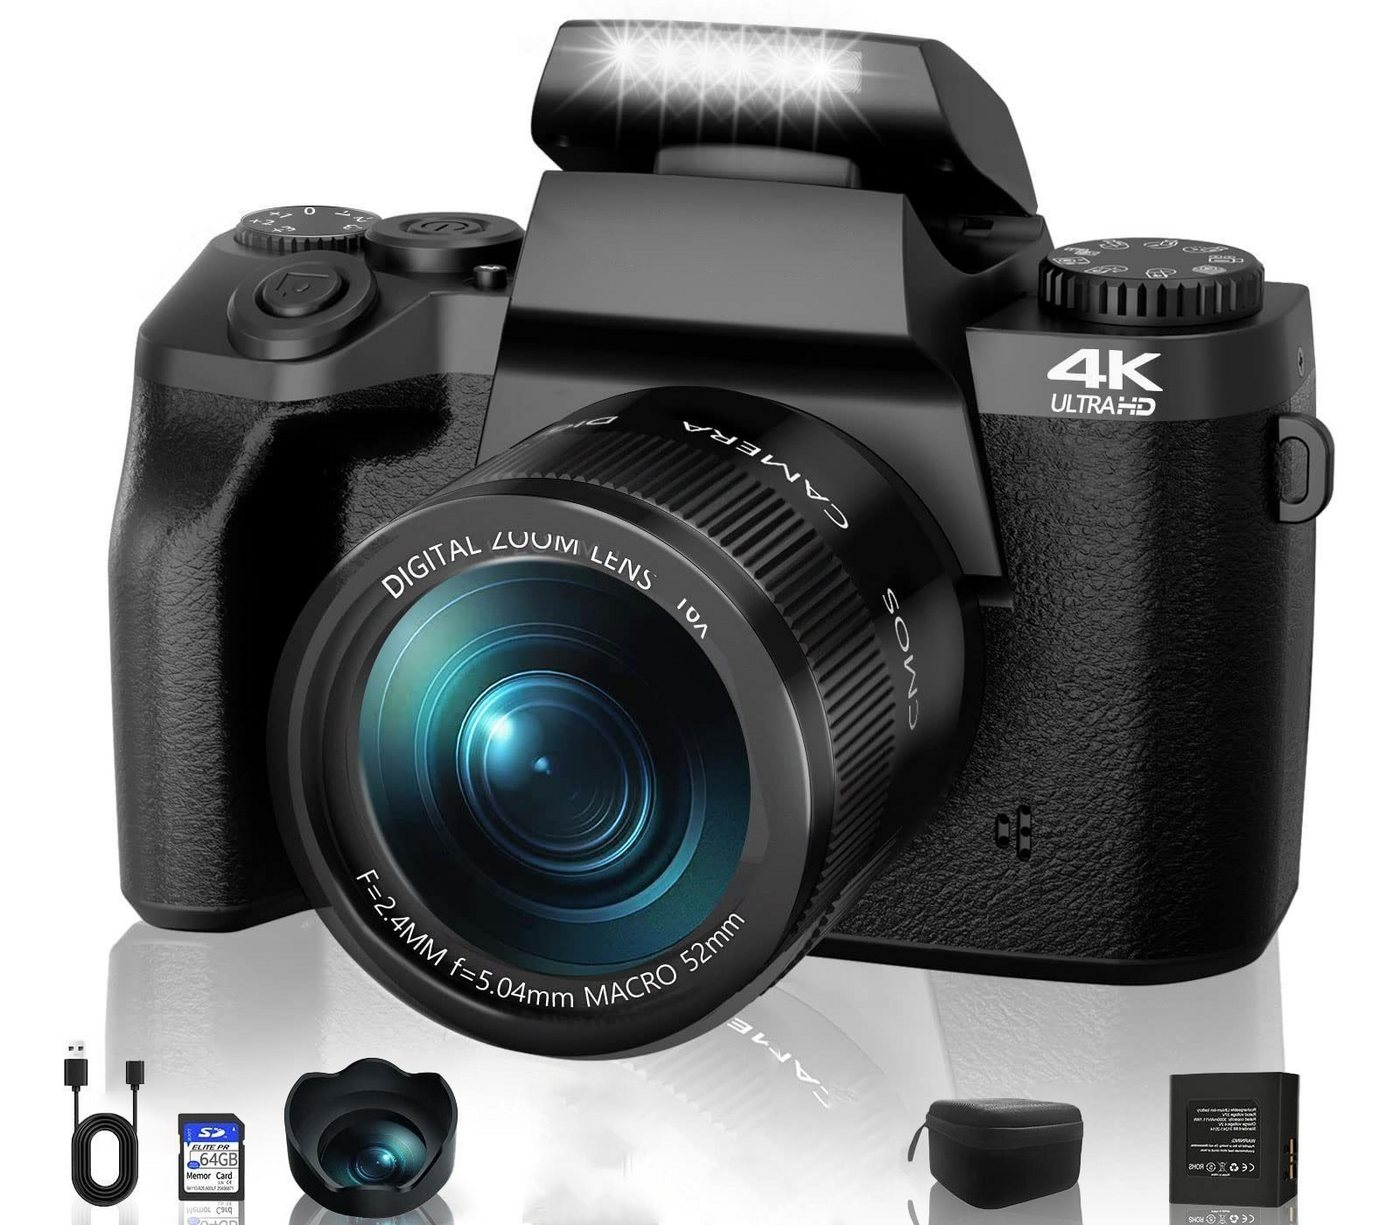 Fine Life Pro W5 Digitalkamera 64MP Kompaktkamera Superzoom-Kamera (64 MP, WLAN (Wi-Fi), inkl. 4K 64MP Digitalkamera, Kostenlose 32GB Speicherkartex Inklusive Handtasche) von Fine Life Pro